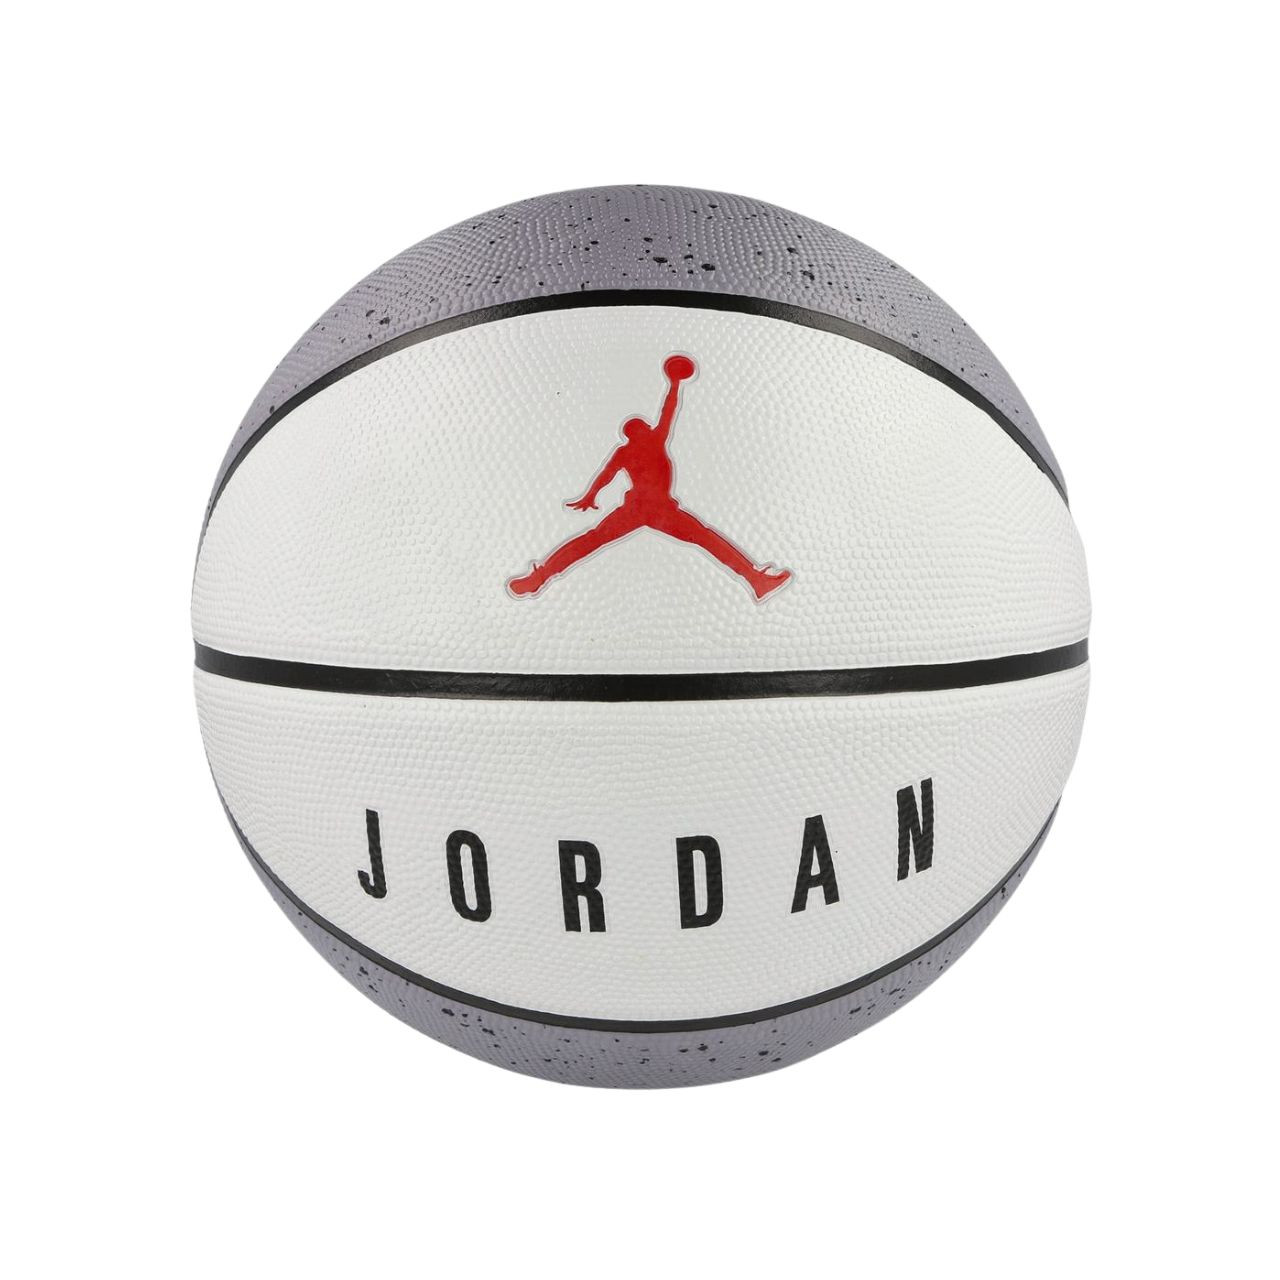 М'яч баскетбольний JORDAN PLAYGROUND 2.0 8P DEFLATED CEMENT J.100.8255.049.07